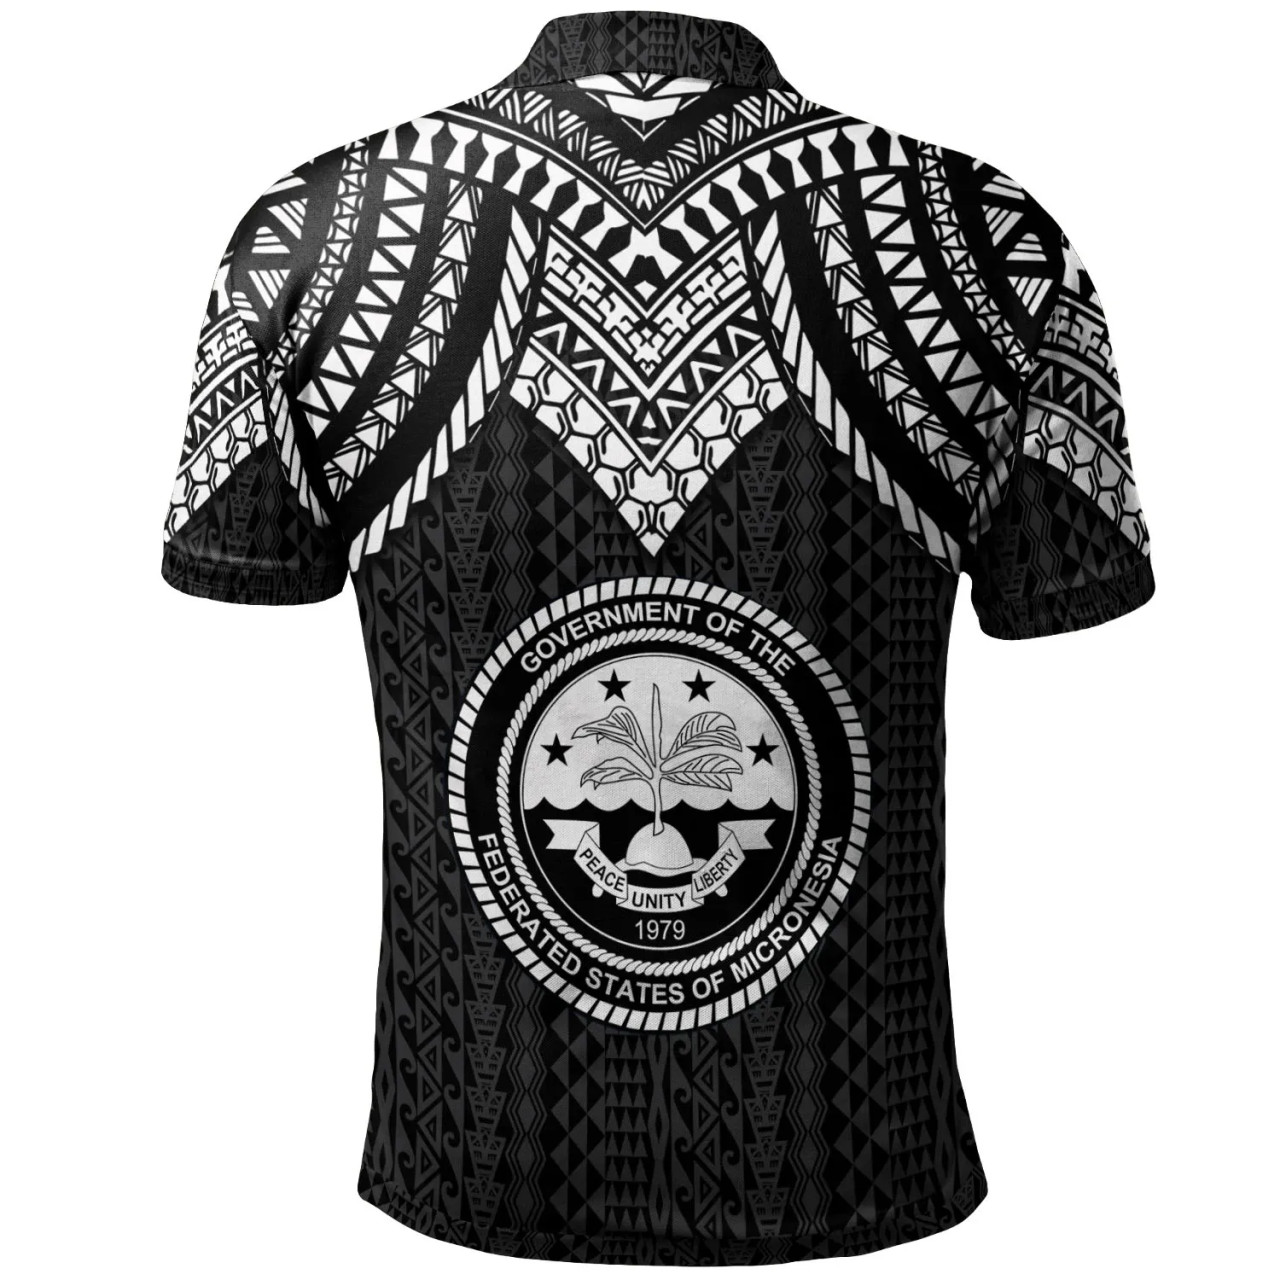 Federated States Of Micronesia Custom Personalised Polo Shirt - Polynesian Armor Style Black 2